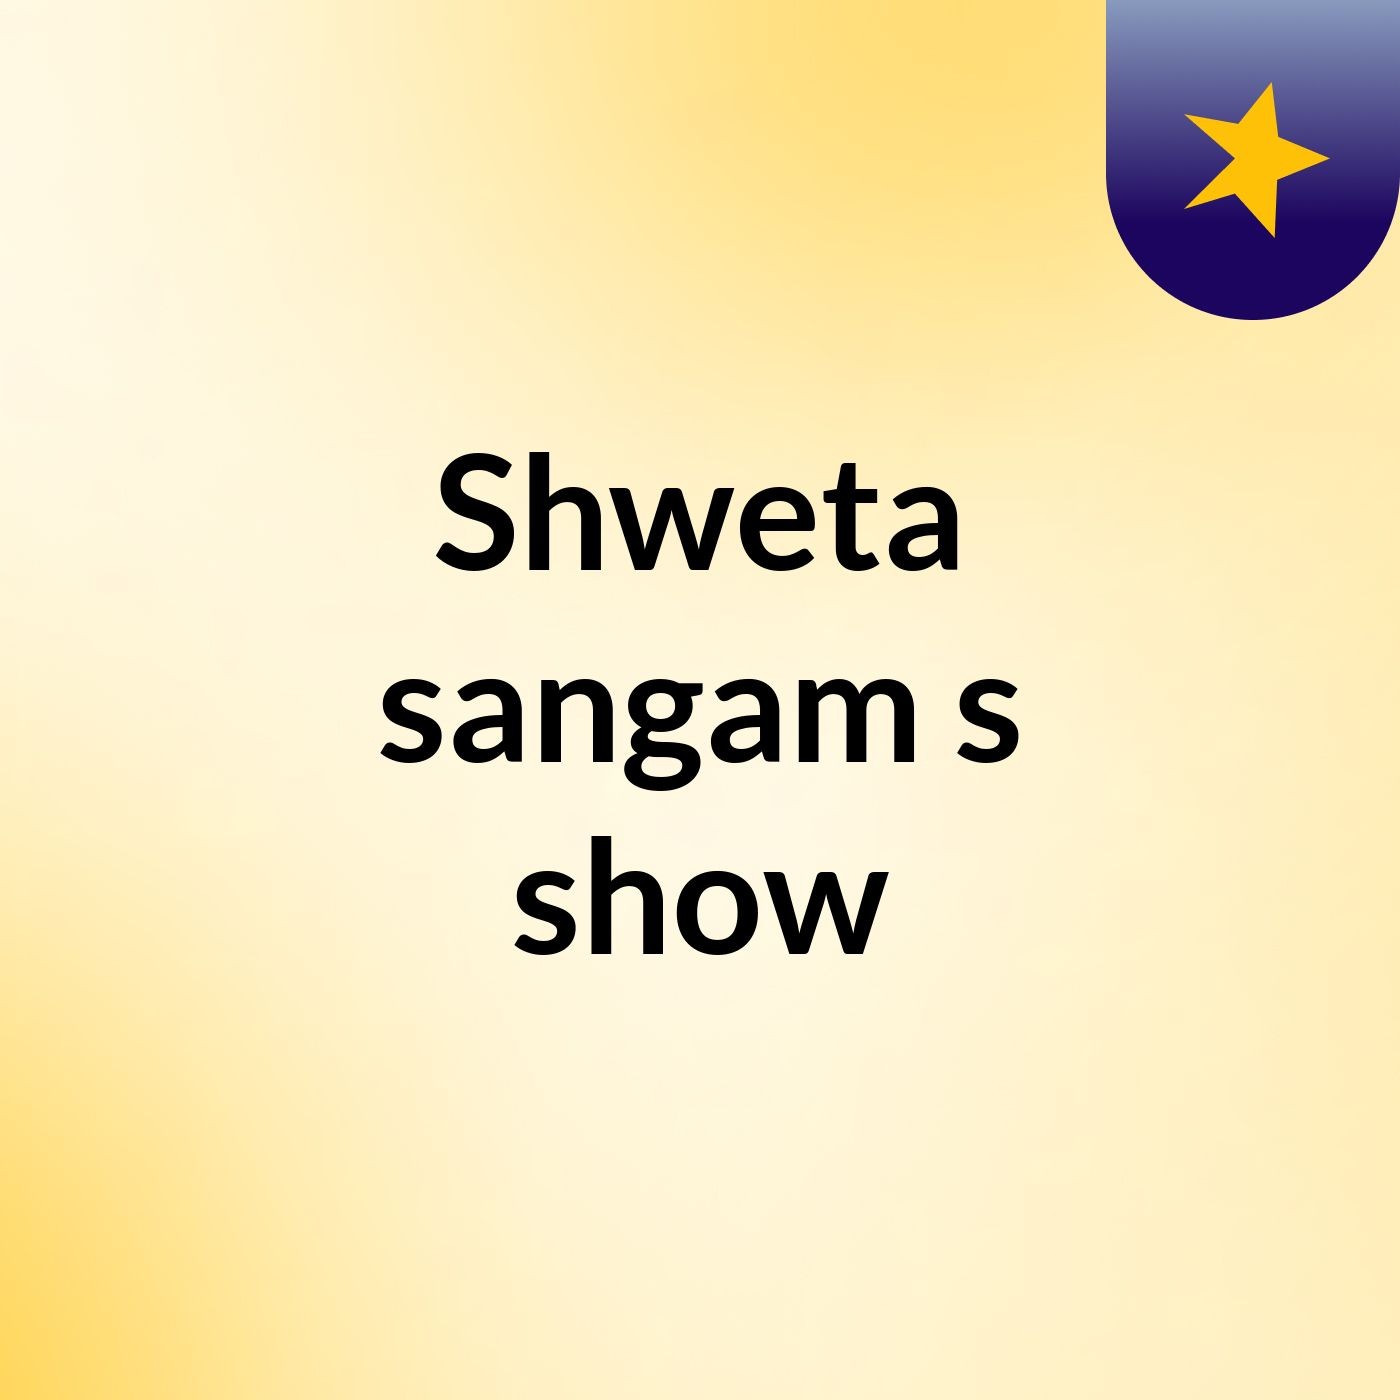 Episode 3 - Shweta sangam's show